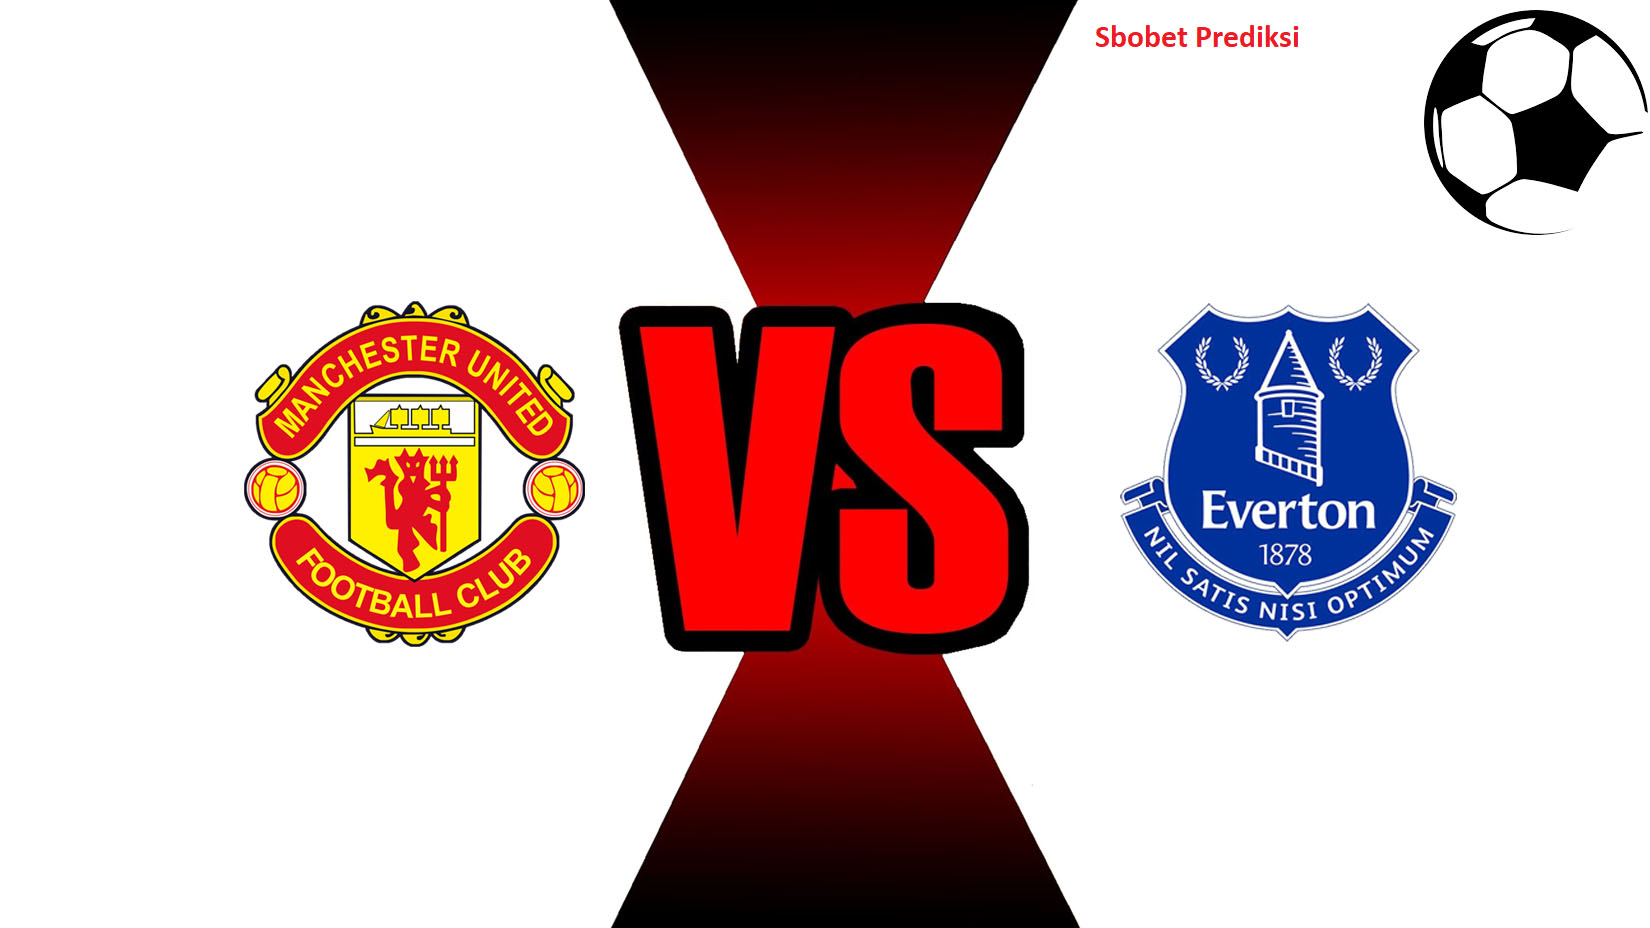 Prediksi Skor Bola Online Manchester United VS Everton 28 Oktober 2018